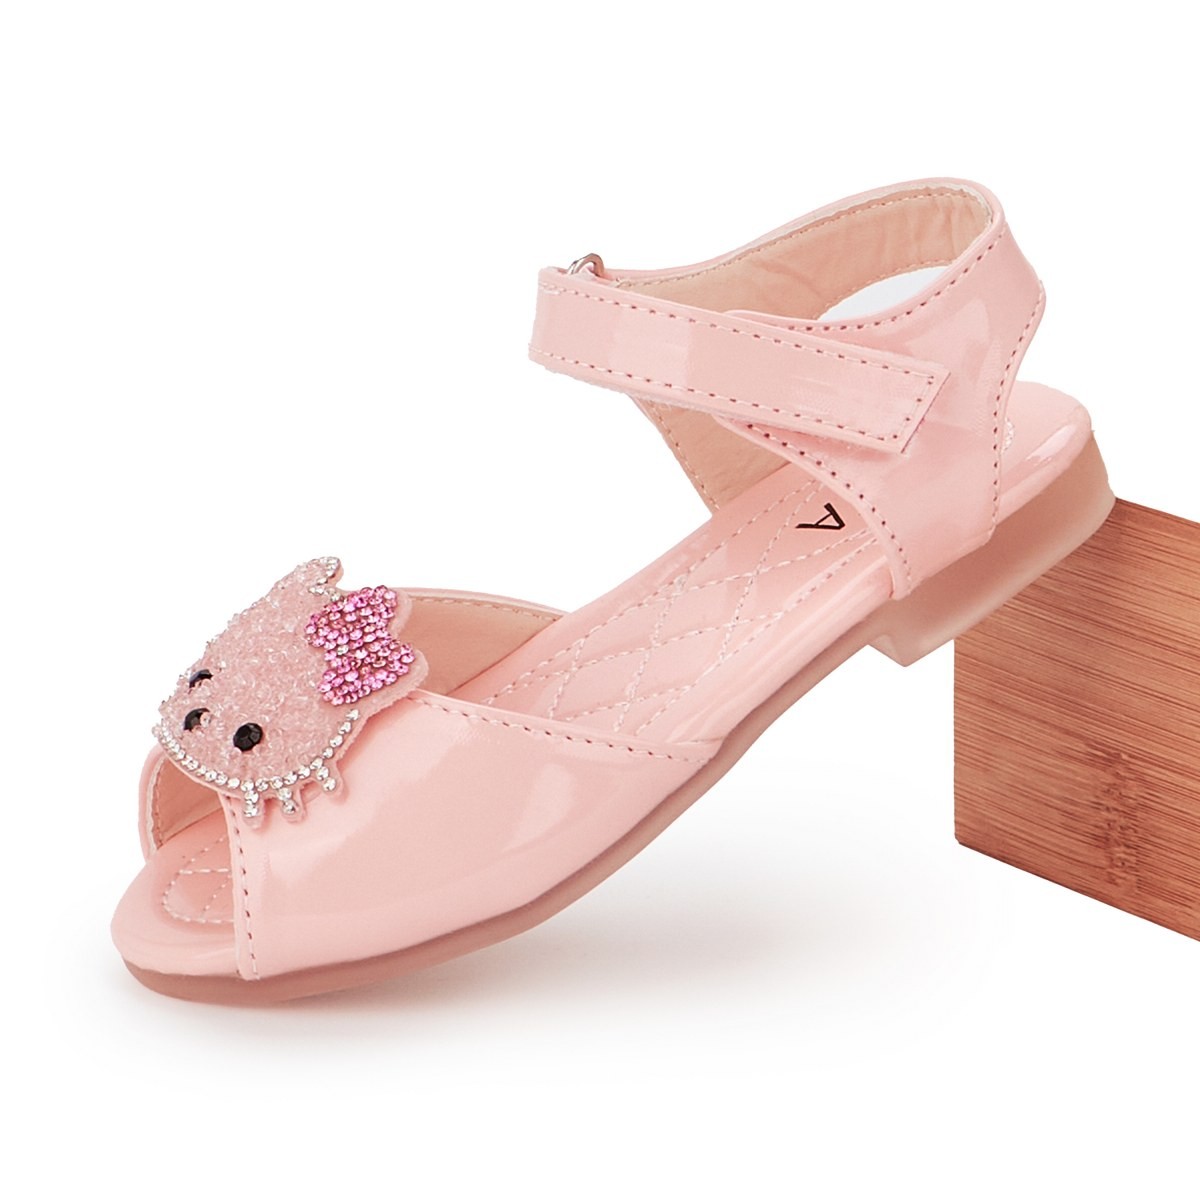 Sandale fata roz cu arici cadrina